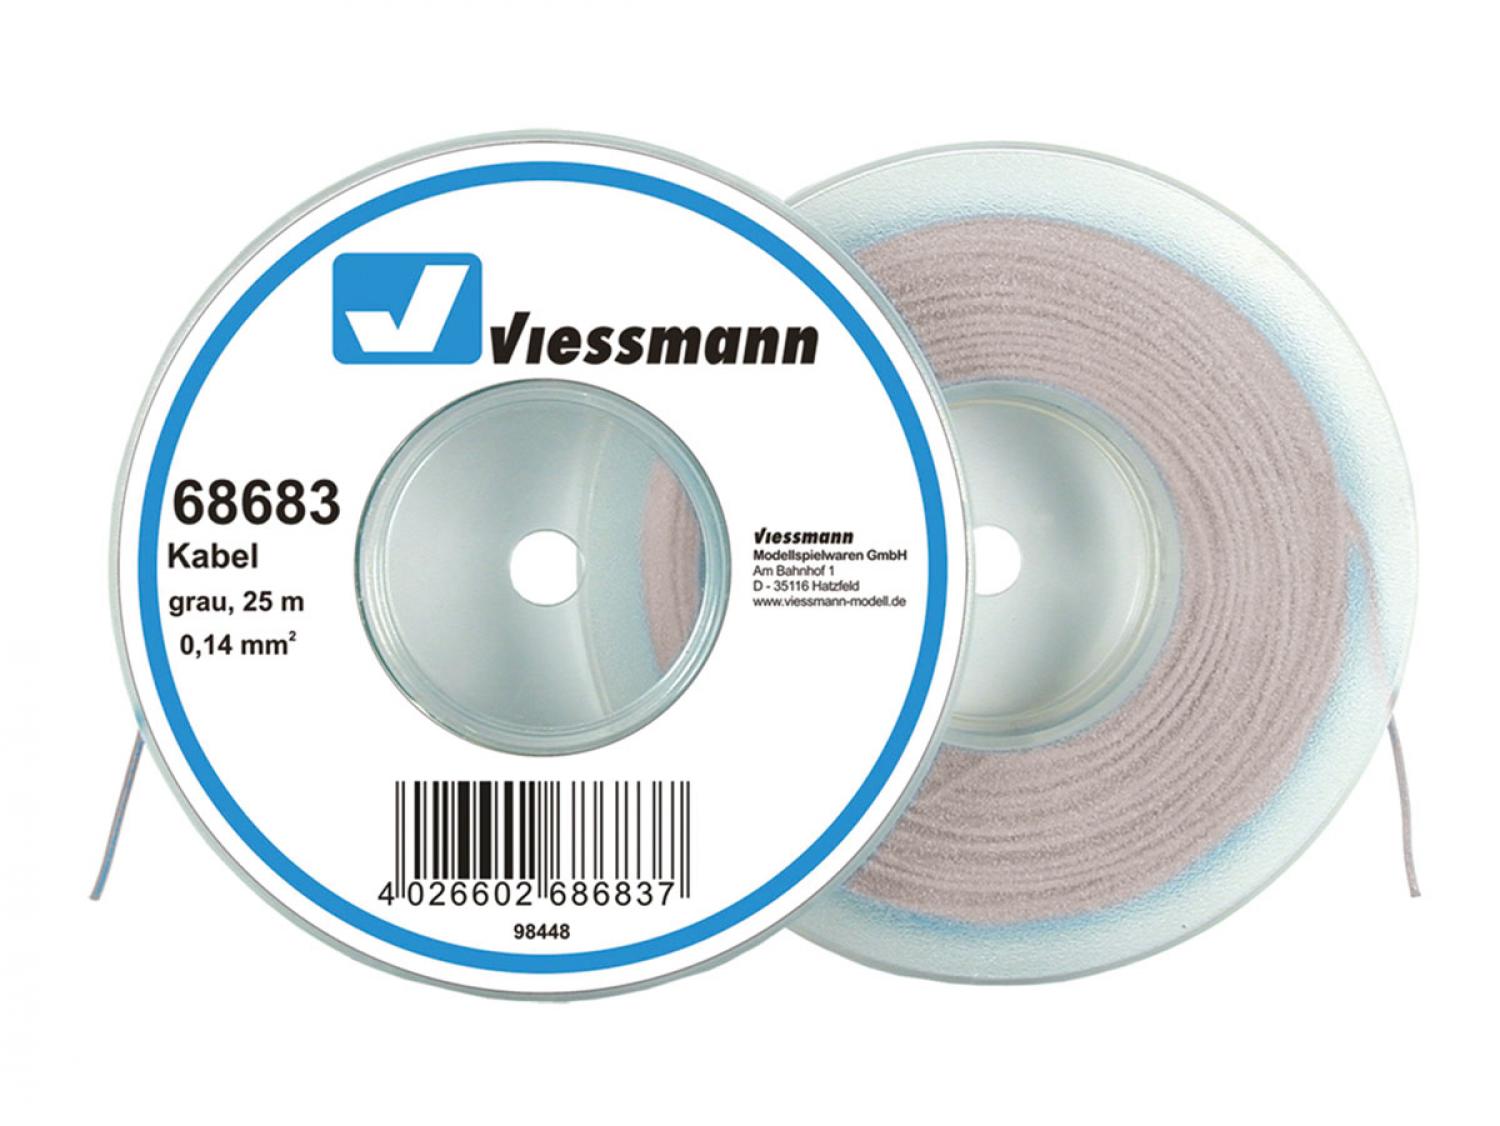 Viessmann 68683 Kabel 25 m, 0,14 mm², grau